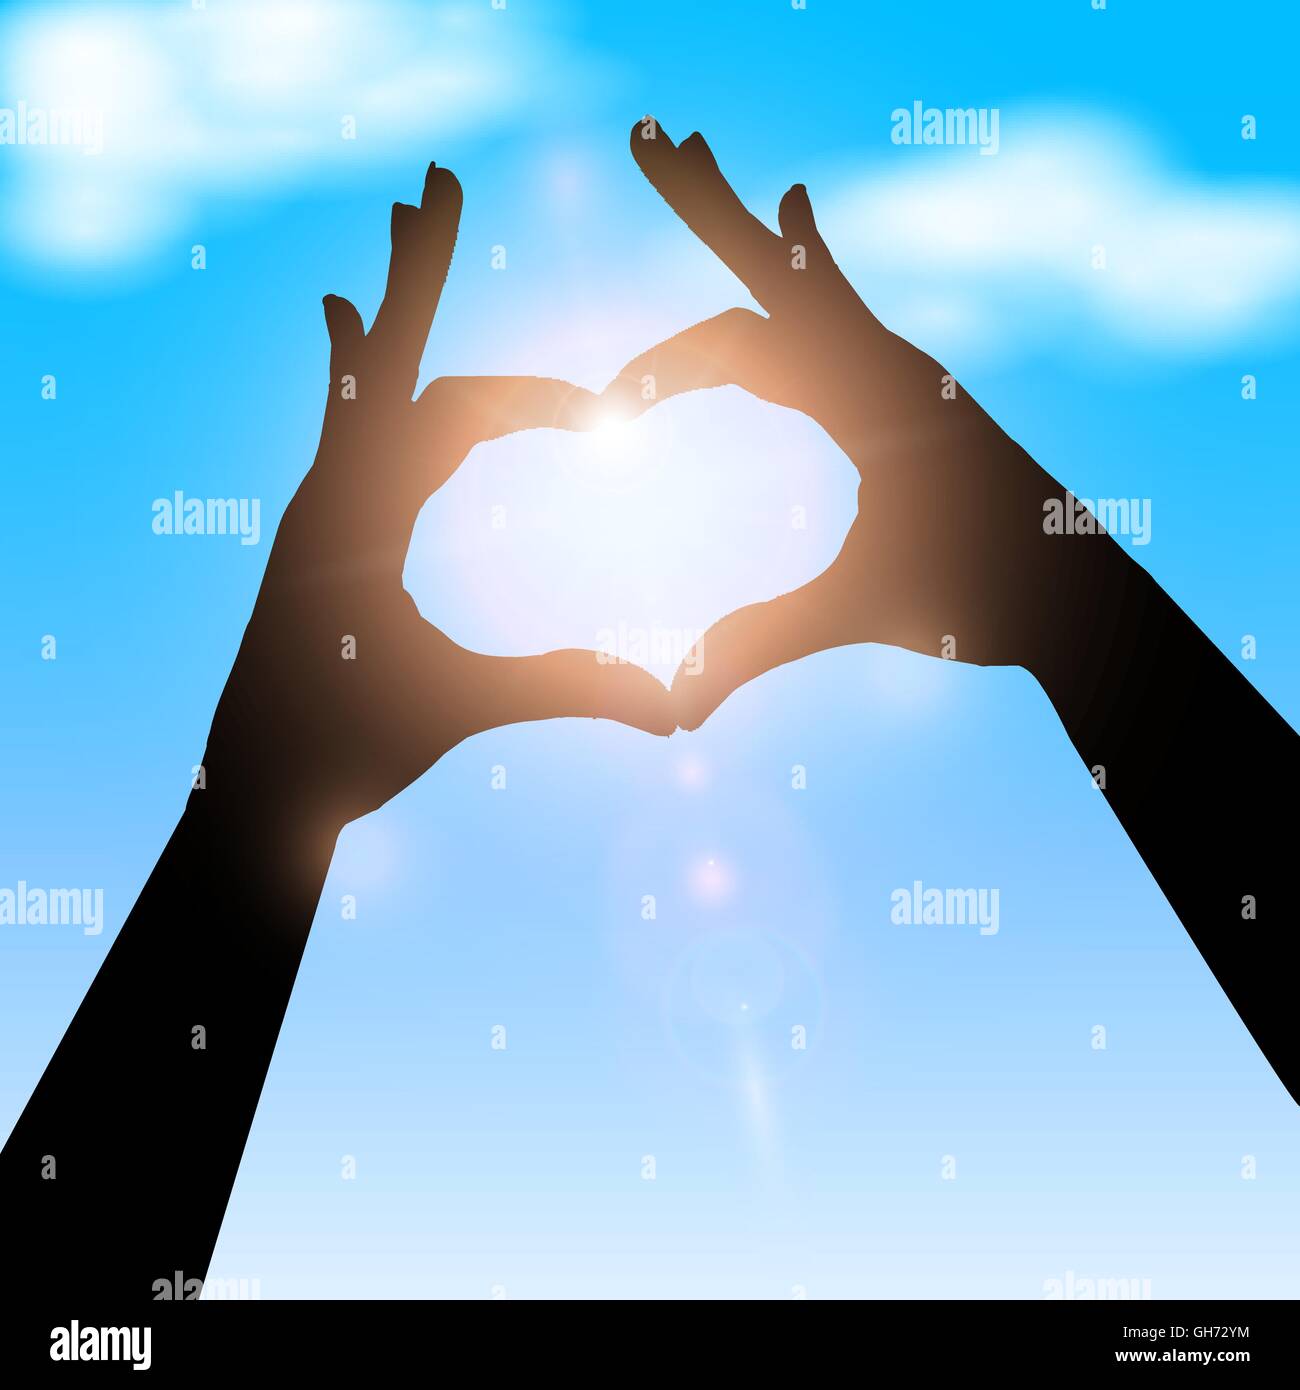 Love shape hand silhouette in sky. Concept vector illustration Stock Vector